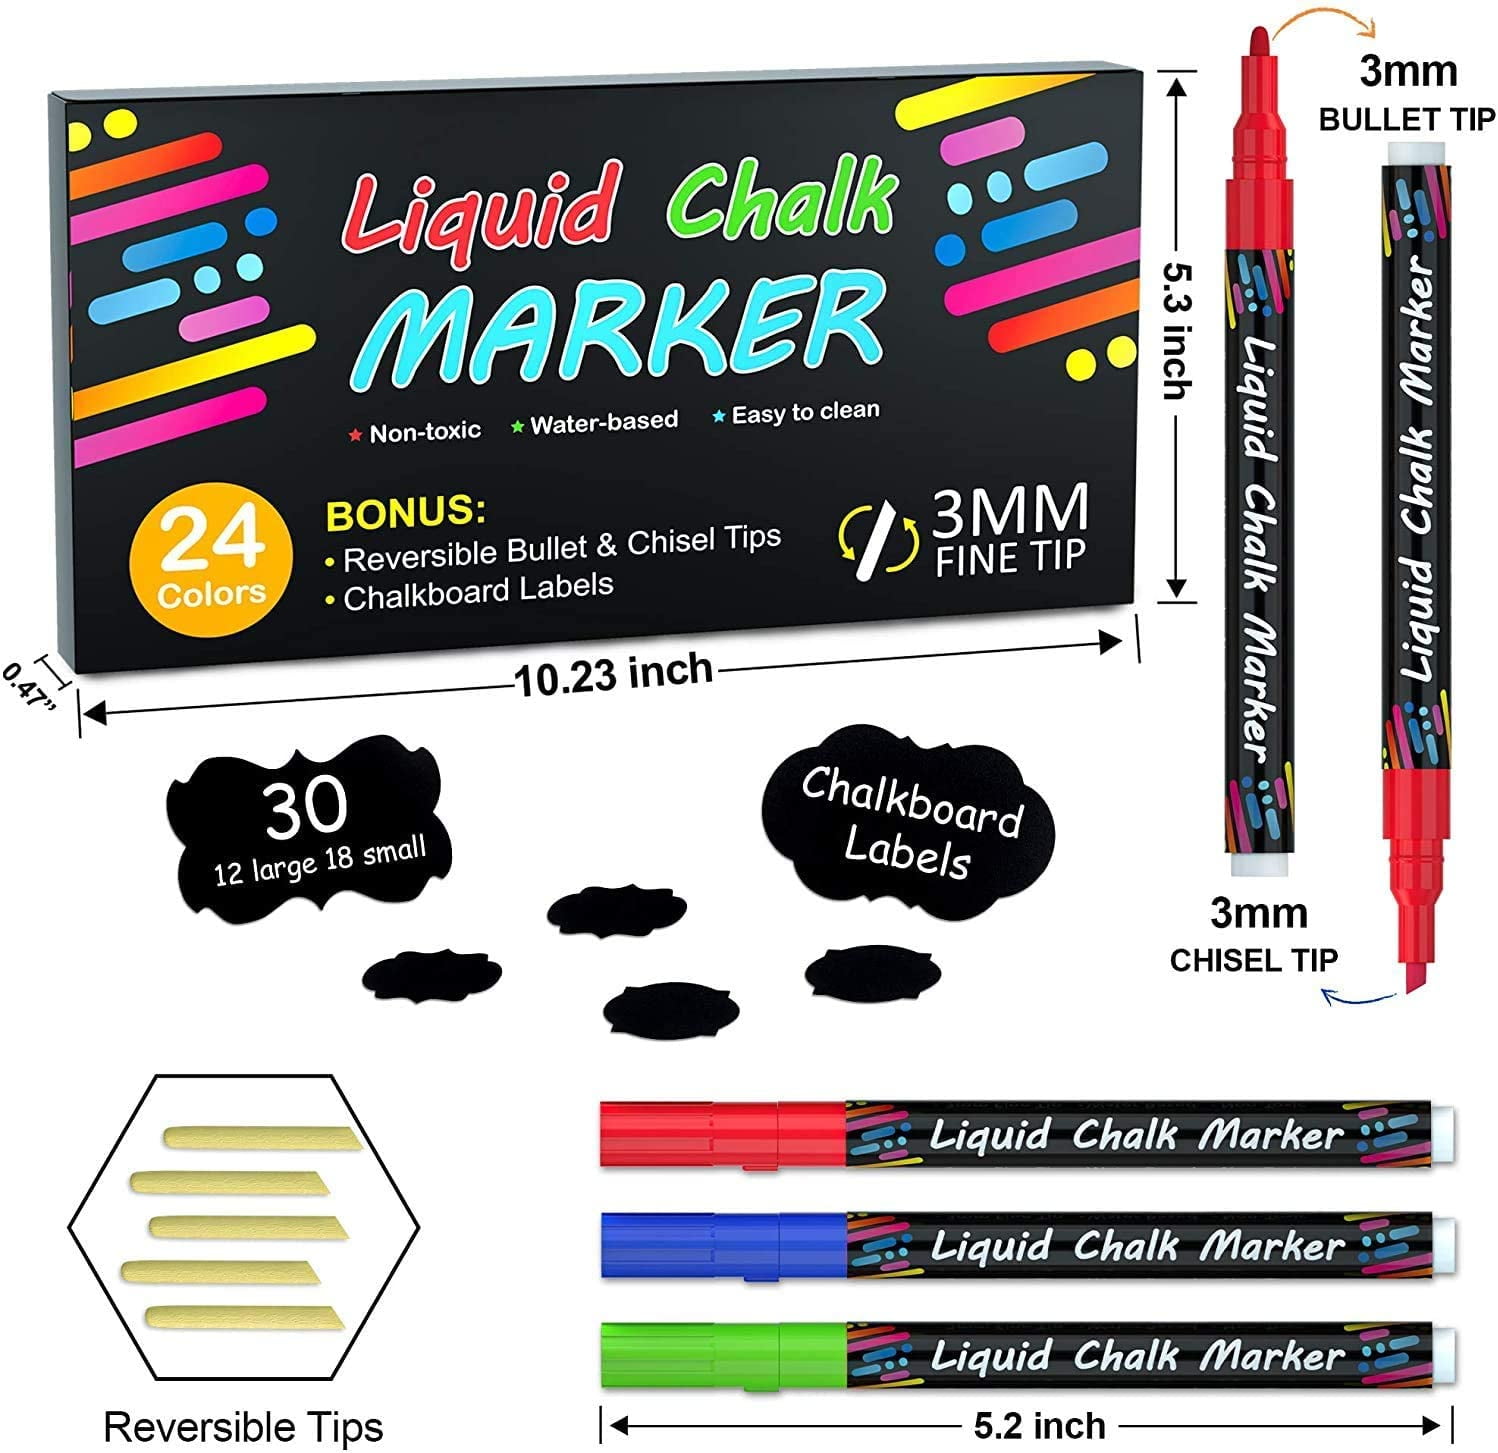 Chalkola 10 Fine Tip Liquid Chalk Markers for Chalkboard Signs, Blackboard,  Window, Labels, Bistro, Glass, Car (10 Pack 3mm) - Wet Wipe Erasable Ink  Chalk Board Markers, 3mm Reversible Tip Chalk Pens